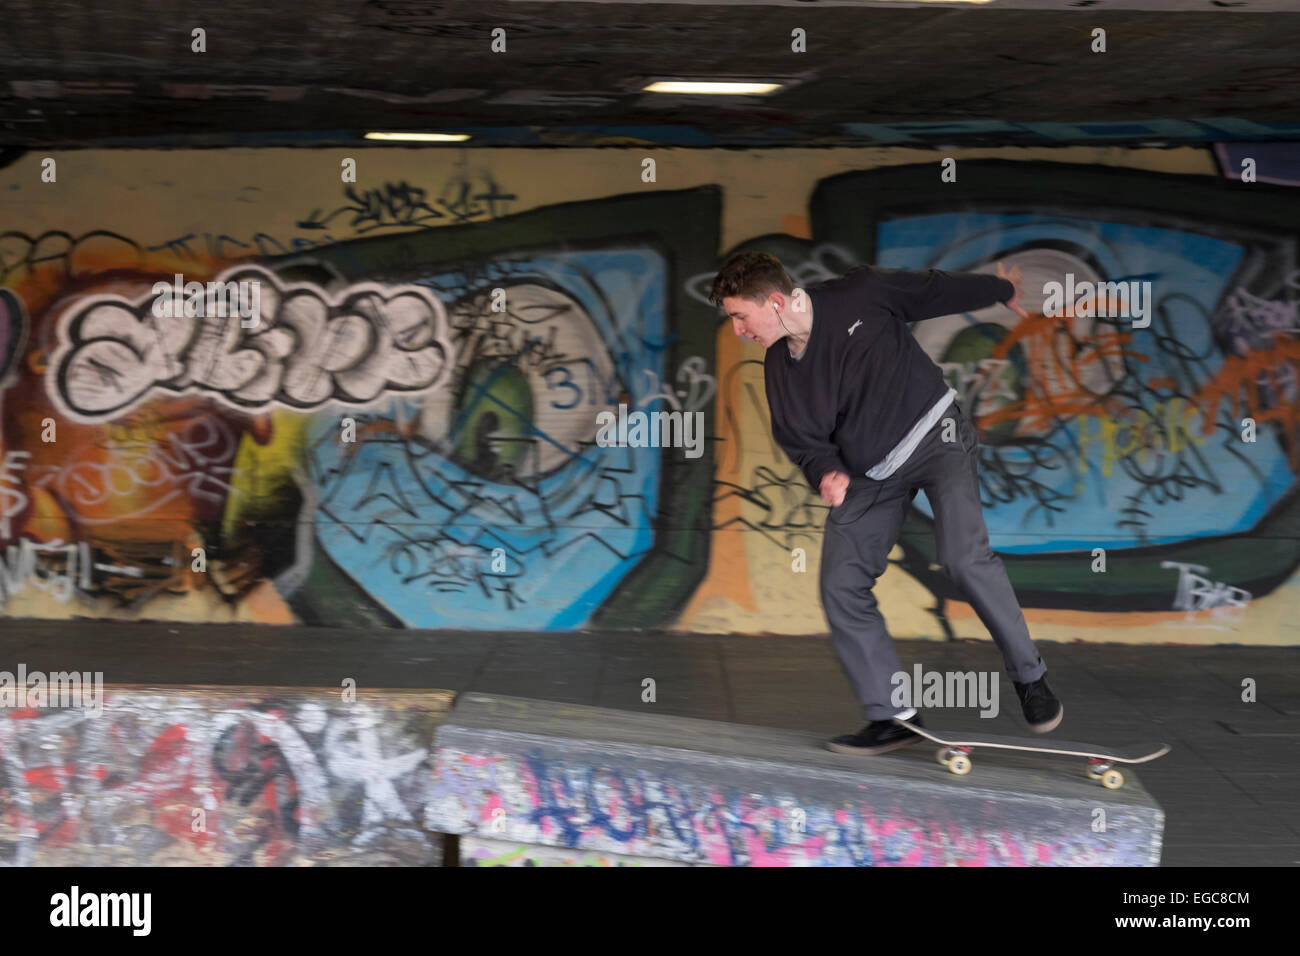 Skateboarders pratica le loro competenze a Londra, sotto croft on Southbank Foto Stock